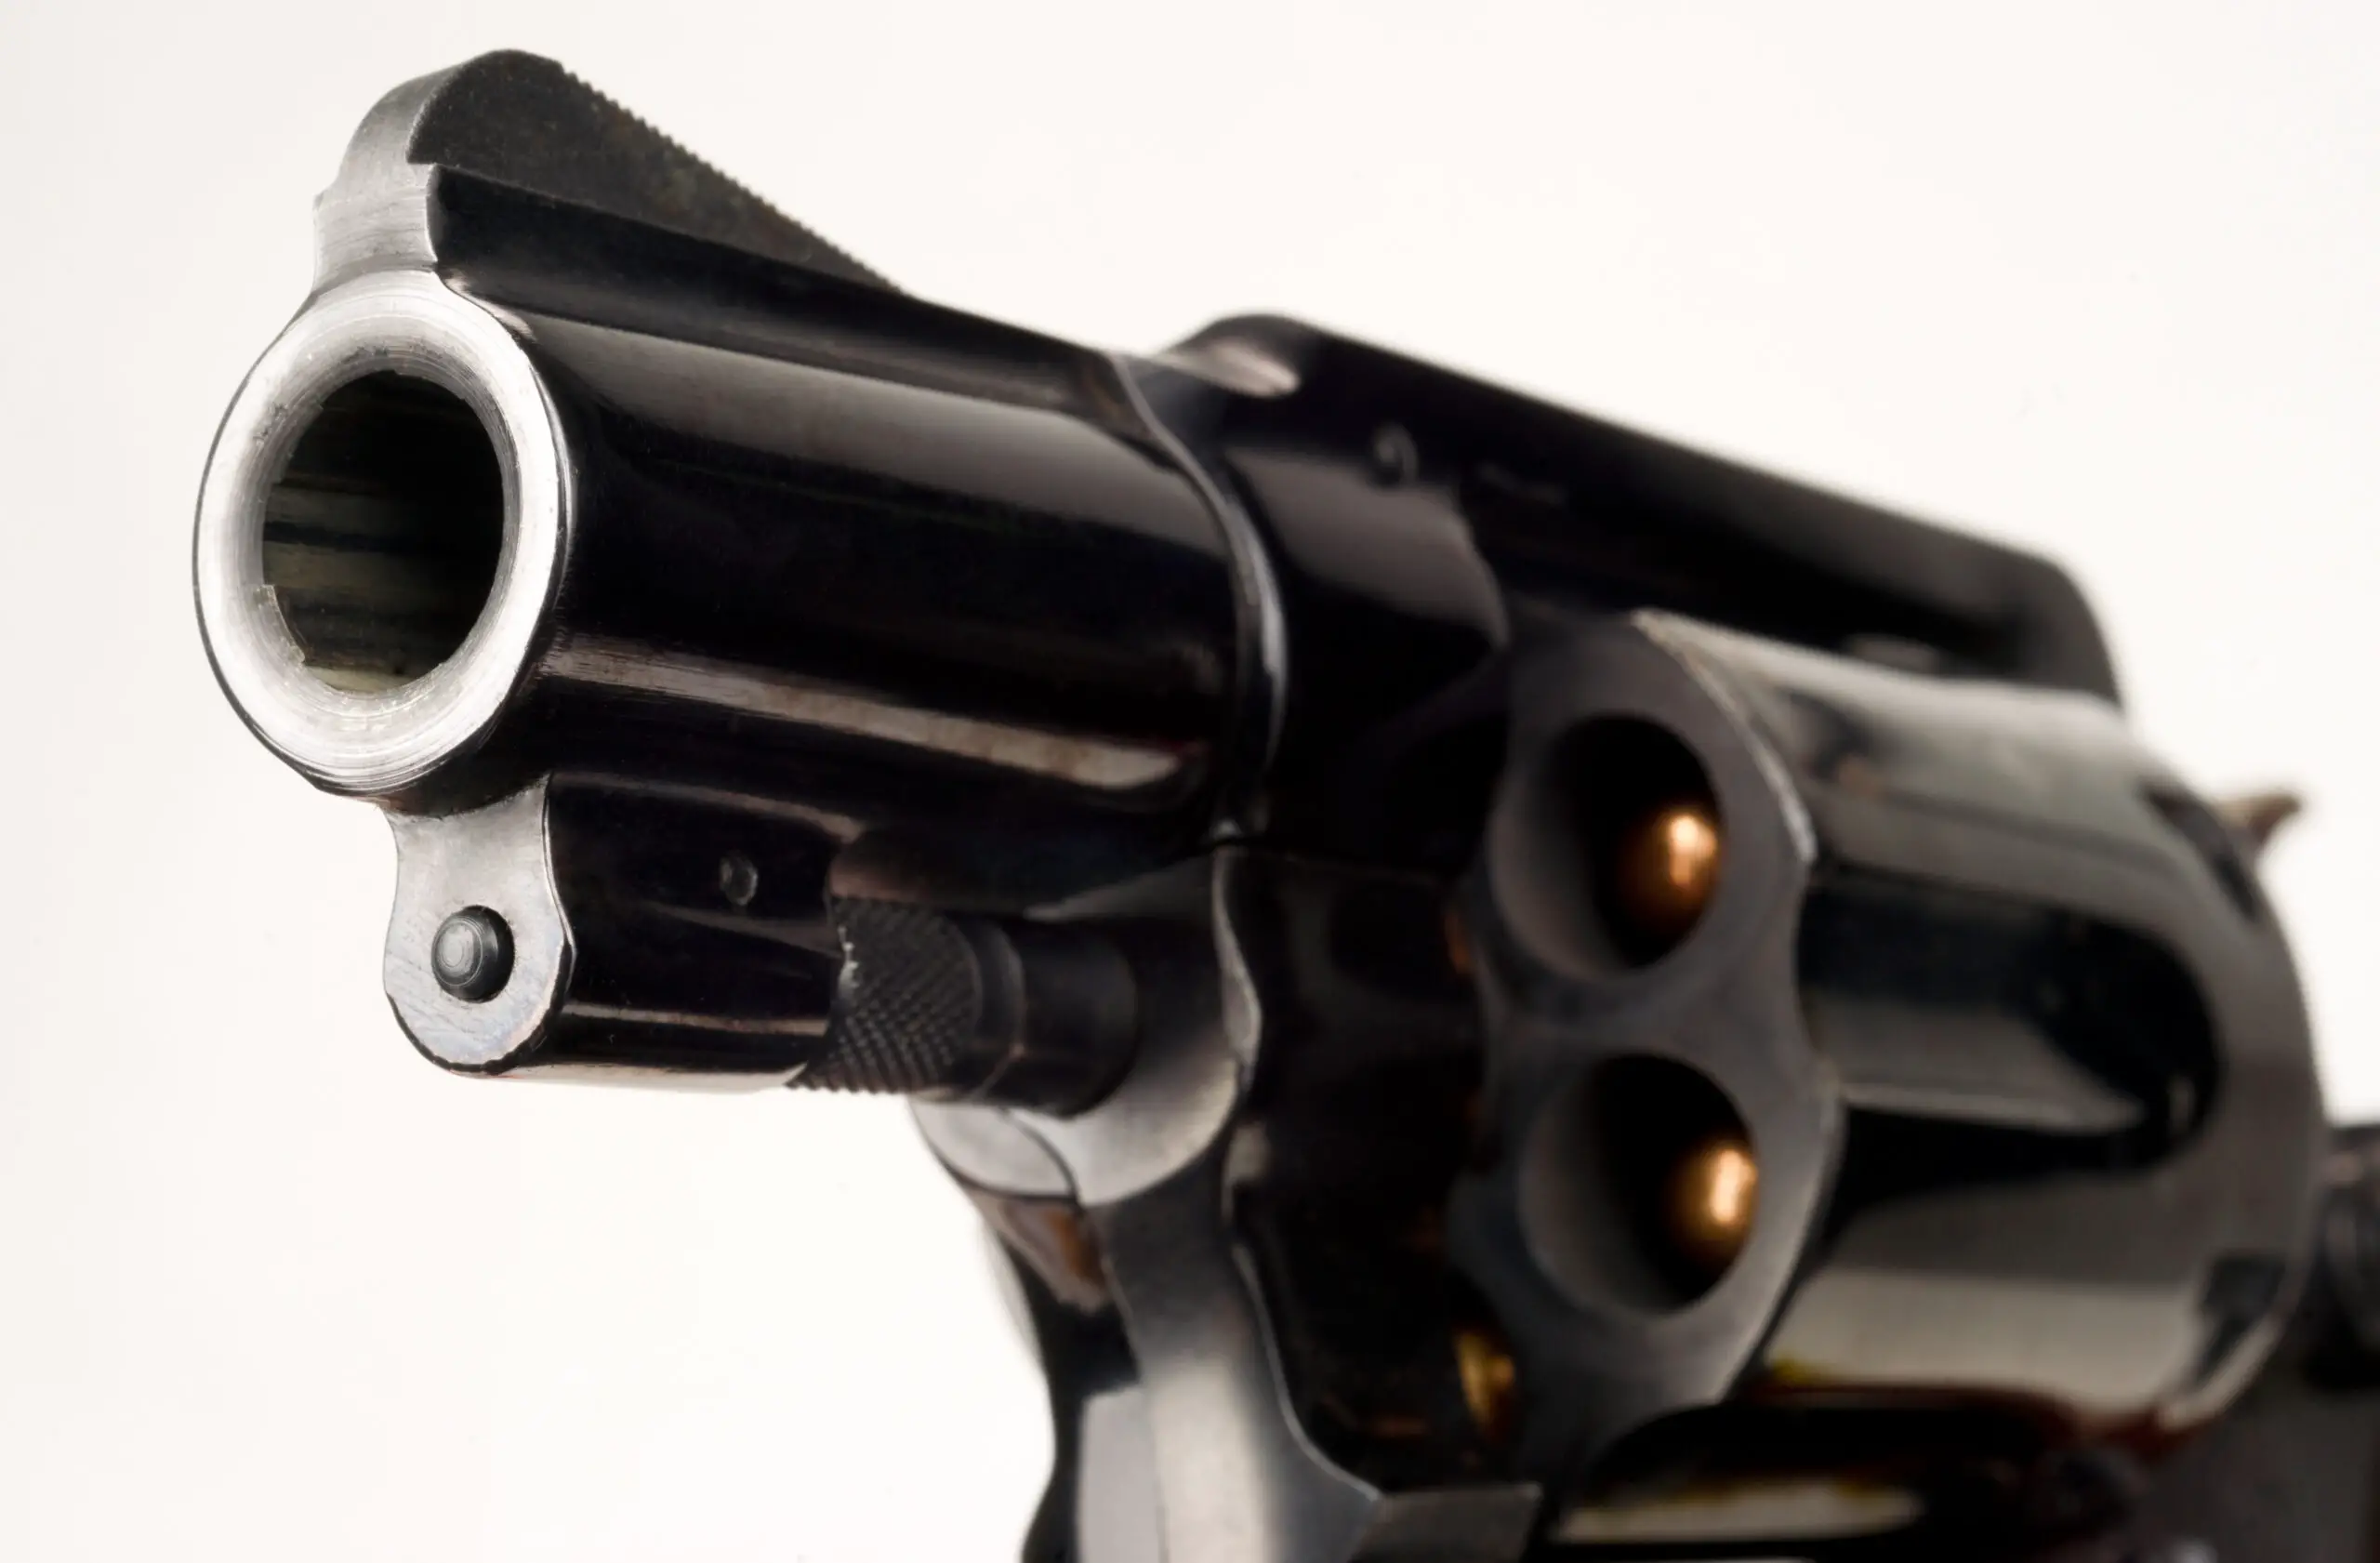 38 Caliber Revolver Pistol Loaded Cylinder Gun Barrel Close Up Pointed on White